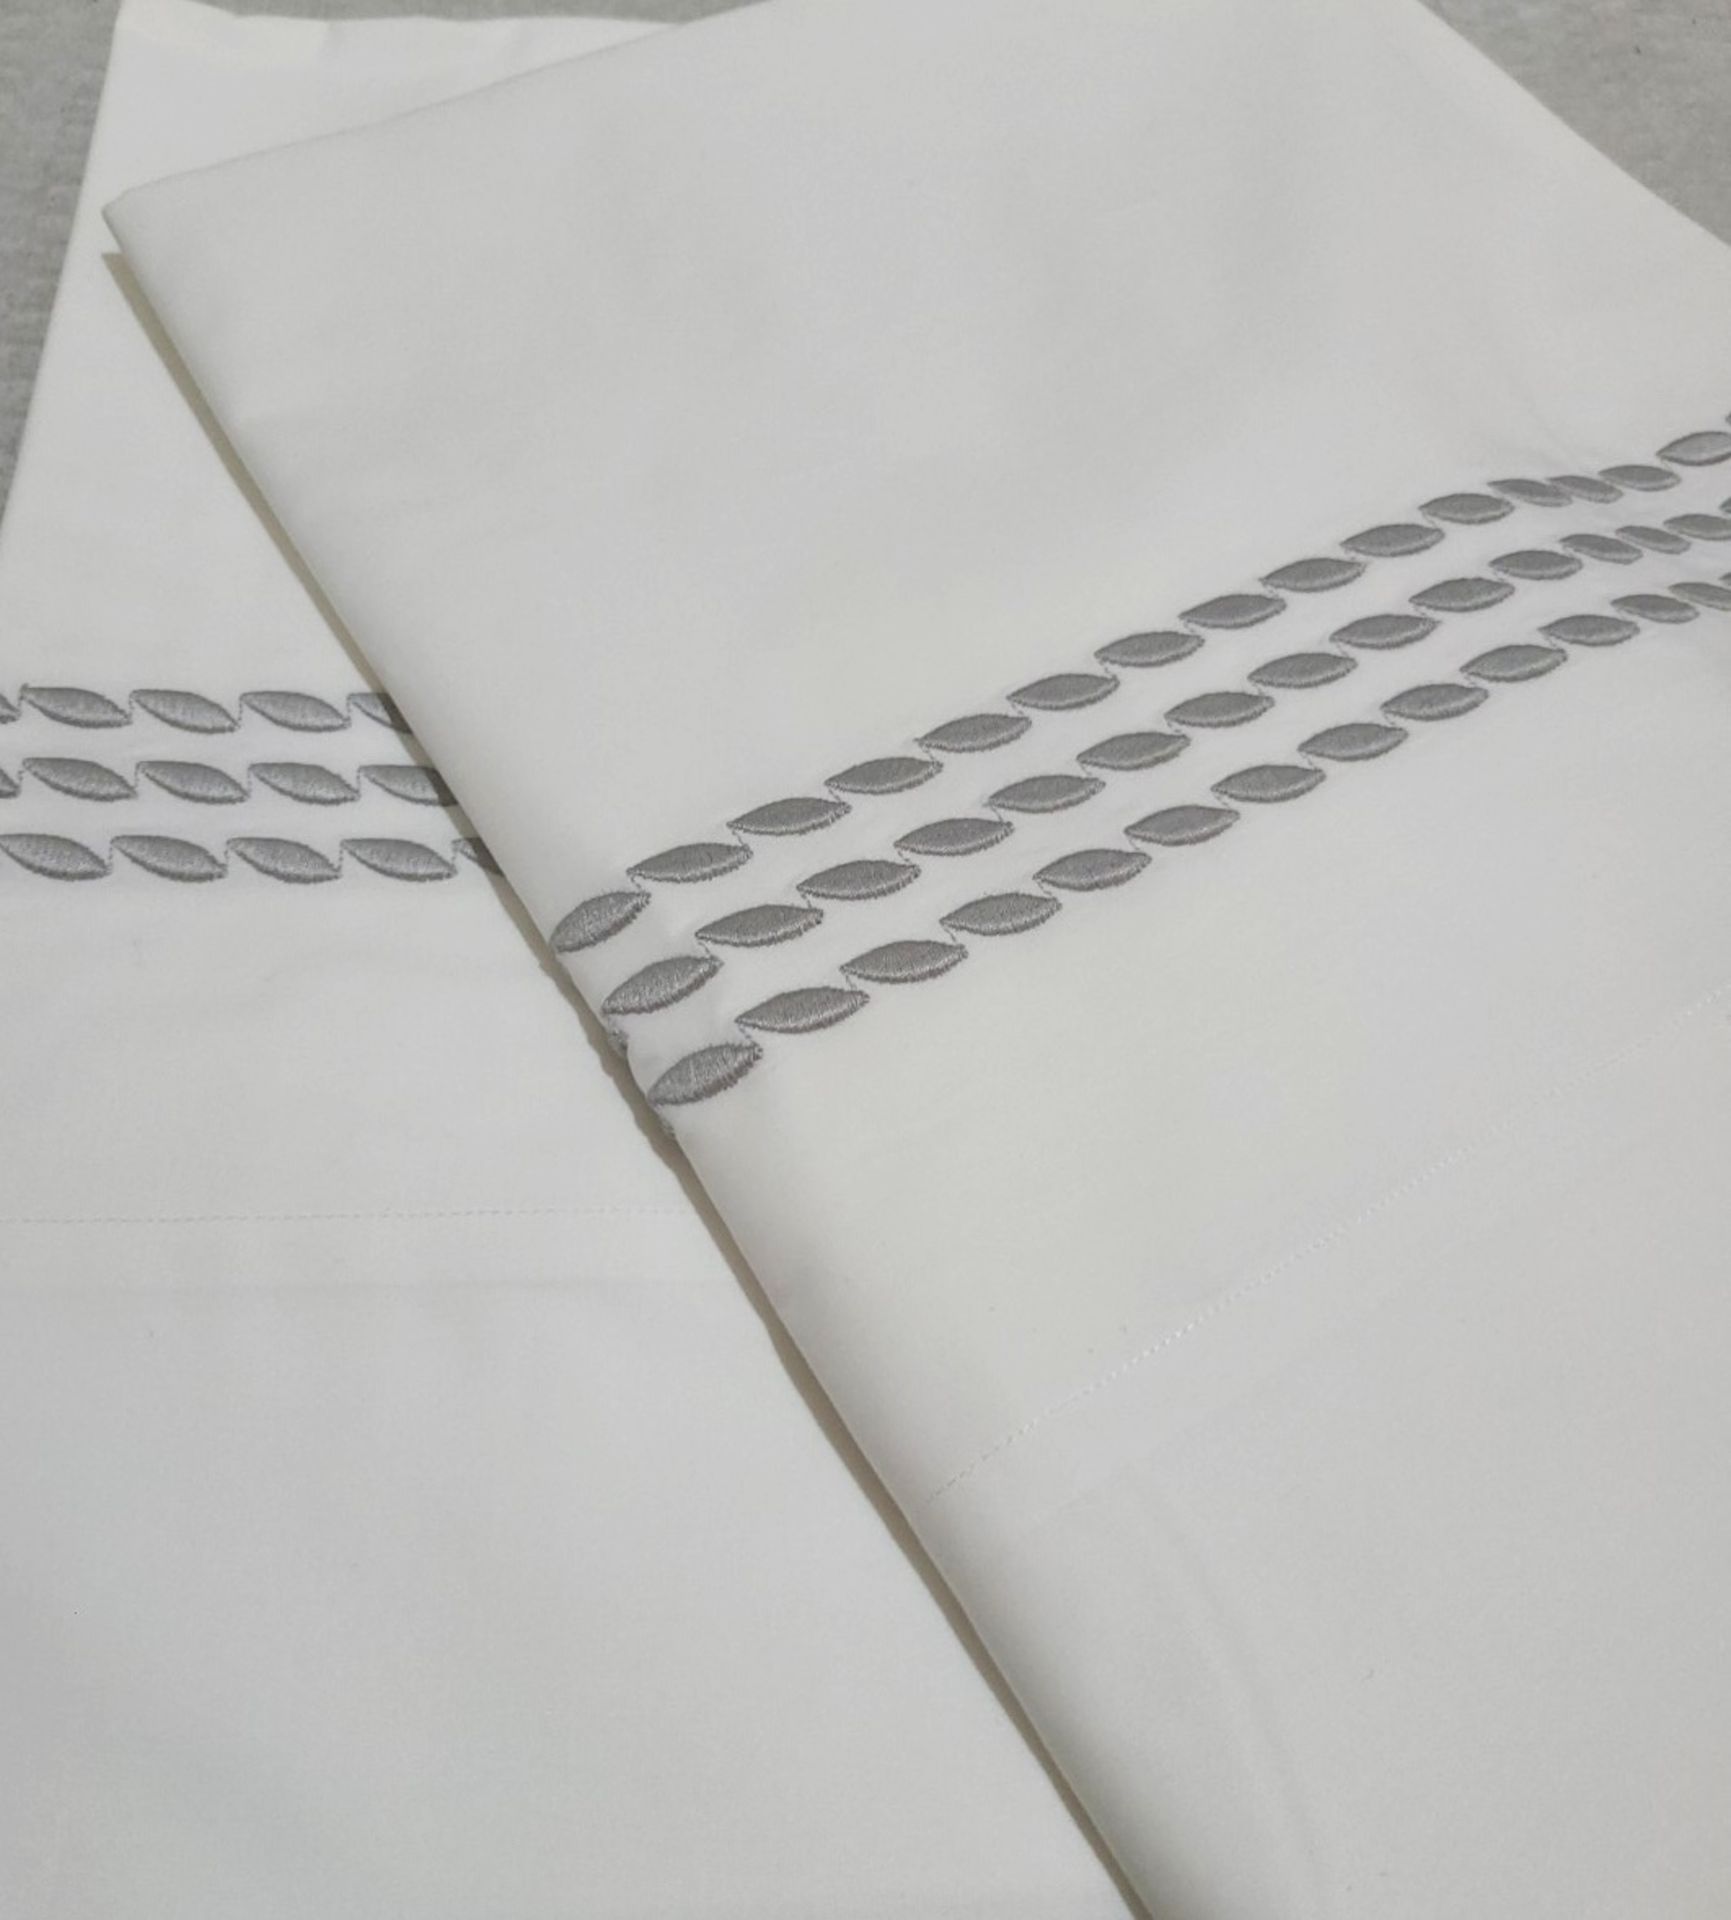 Set of 2 PRATESI Pioggia Embroidery Pillow Shaw 2 50x75cm- Original Price £570.00 - Unused Boxed - Image 3 of 6